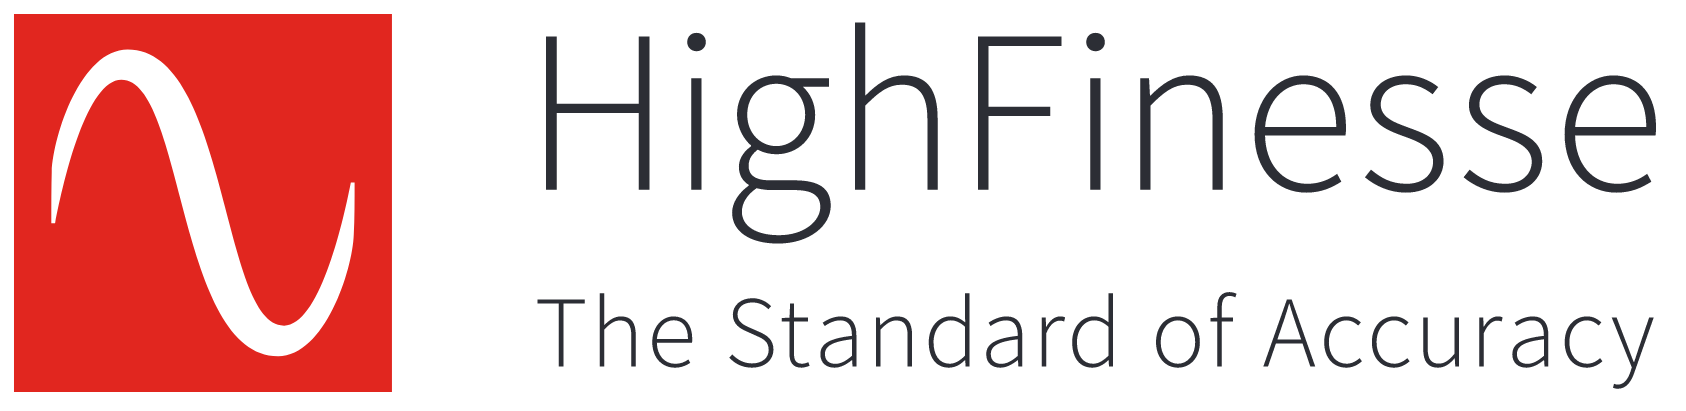 HighFinesse Logo